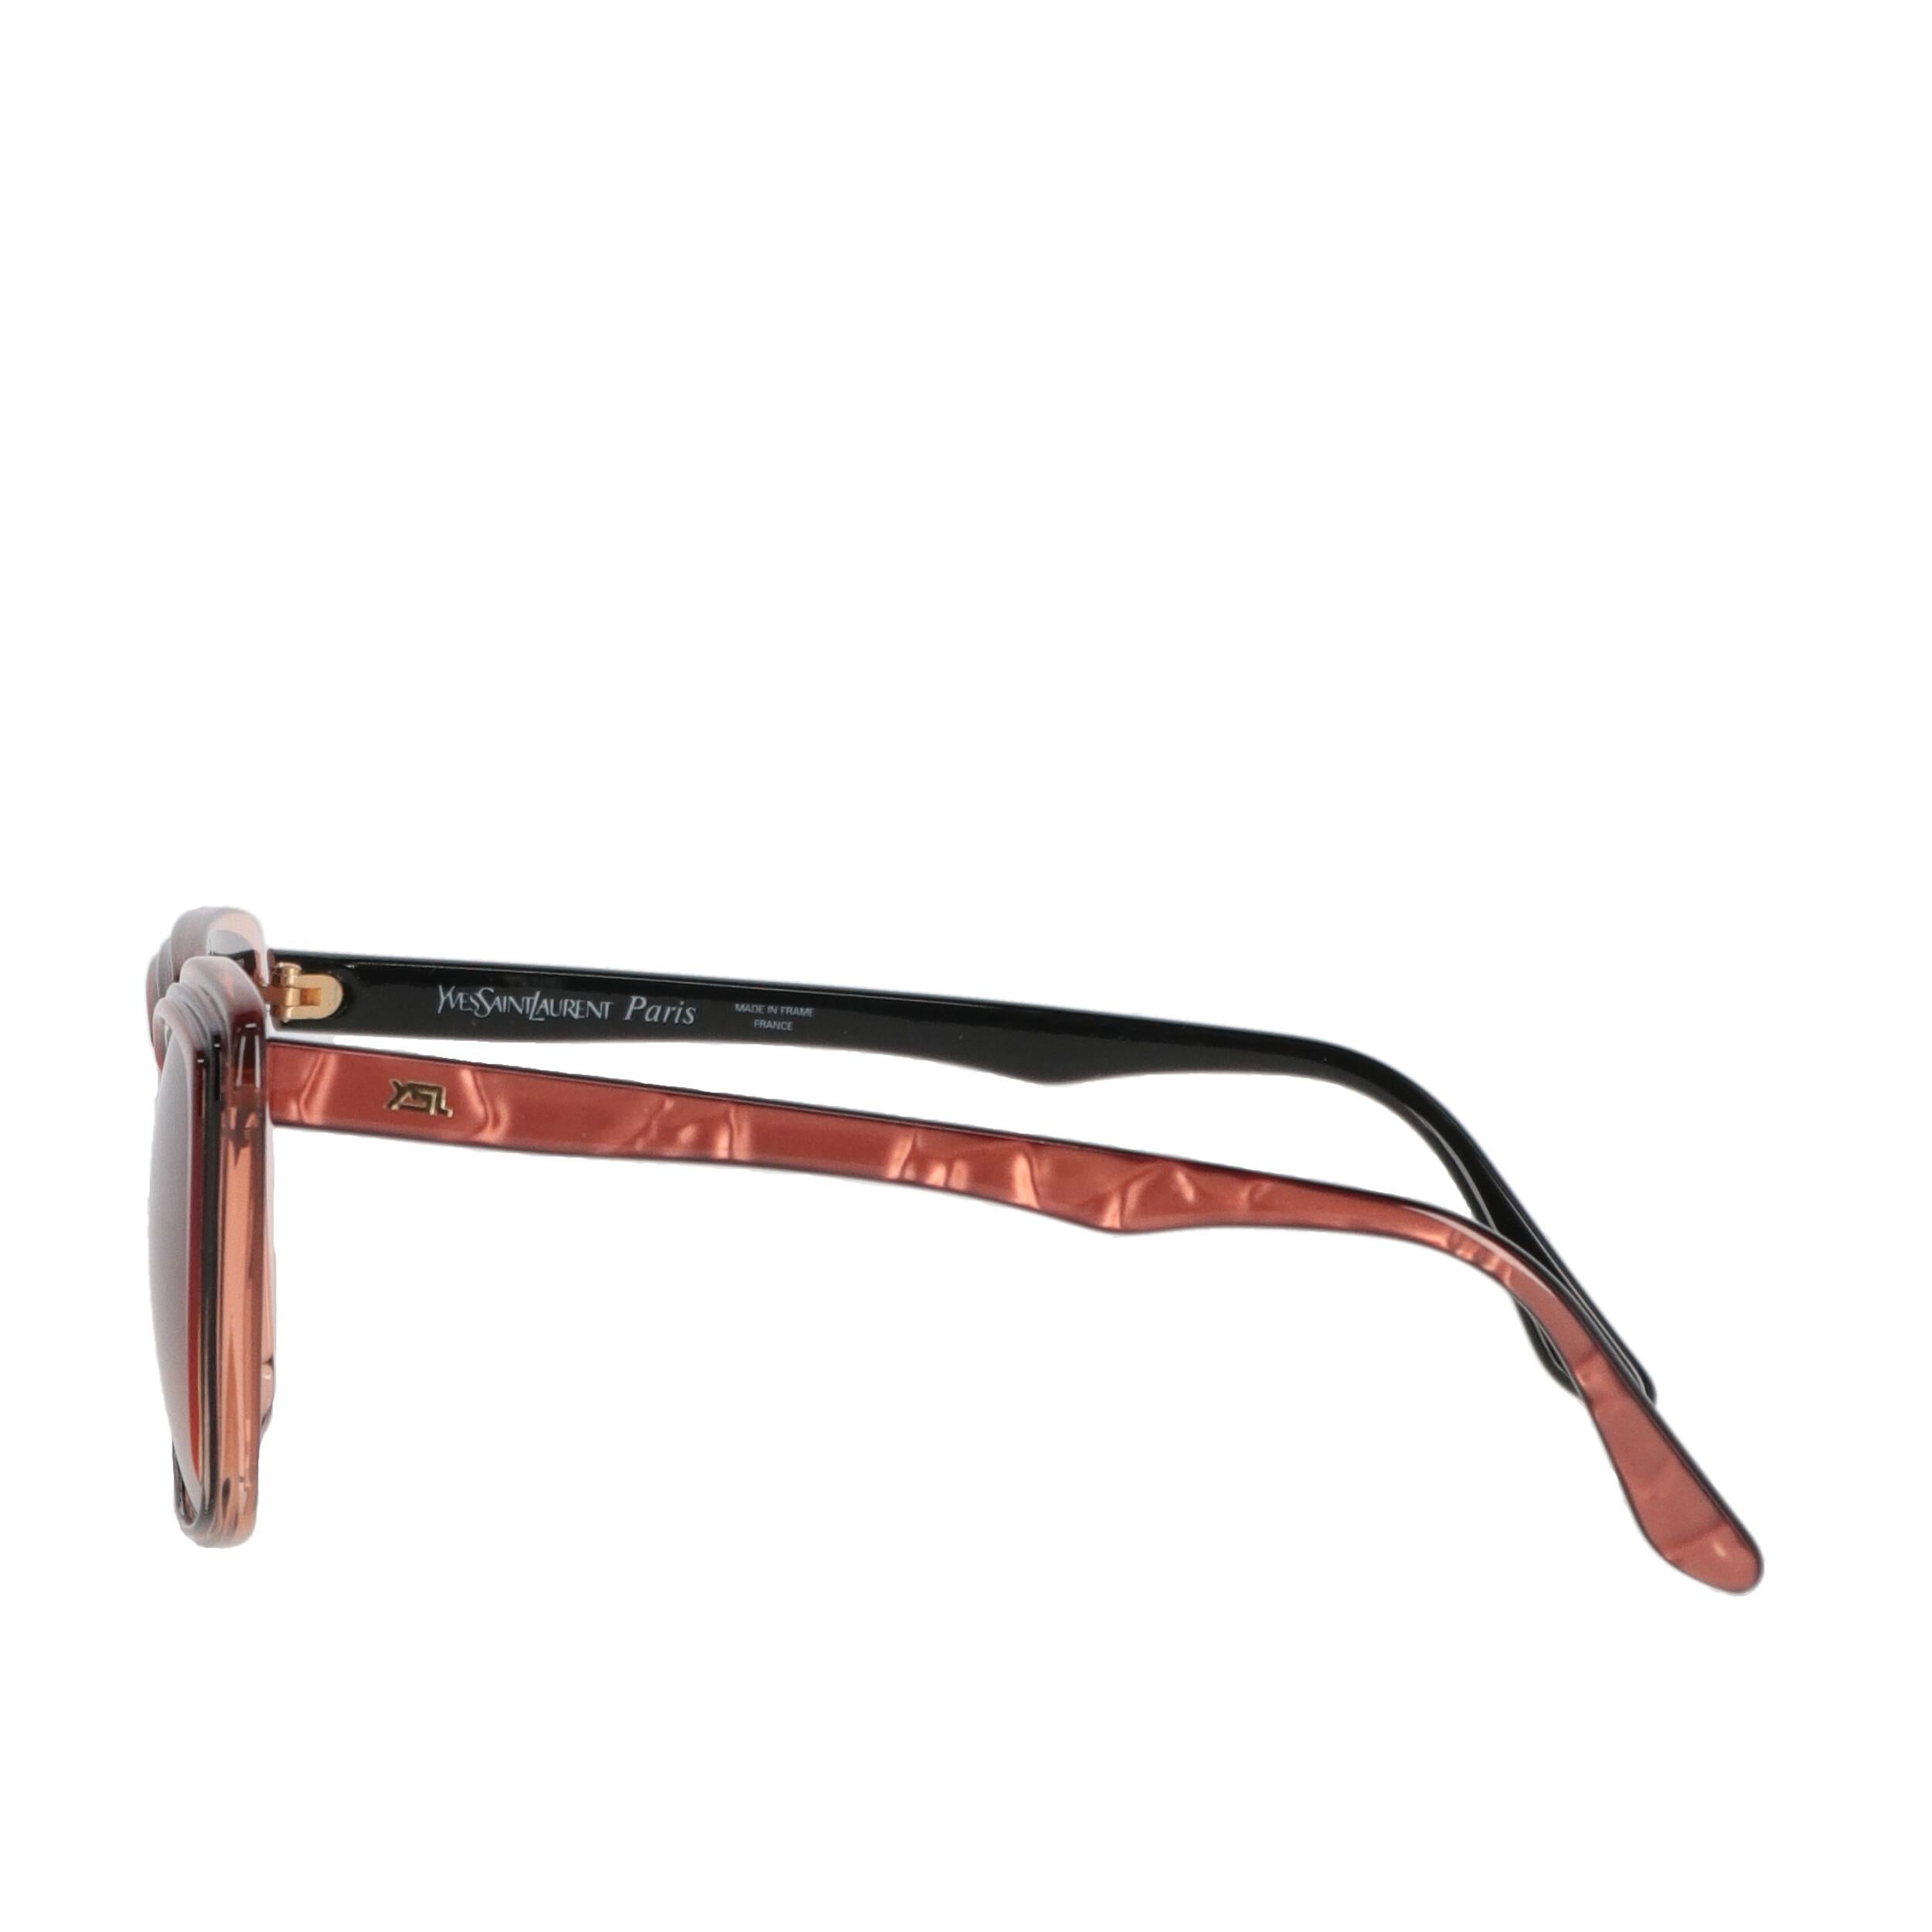 Beige 1970s Yves Saint Laurent Bicolor Sunglasses